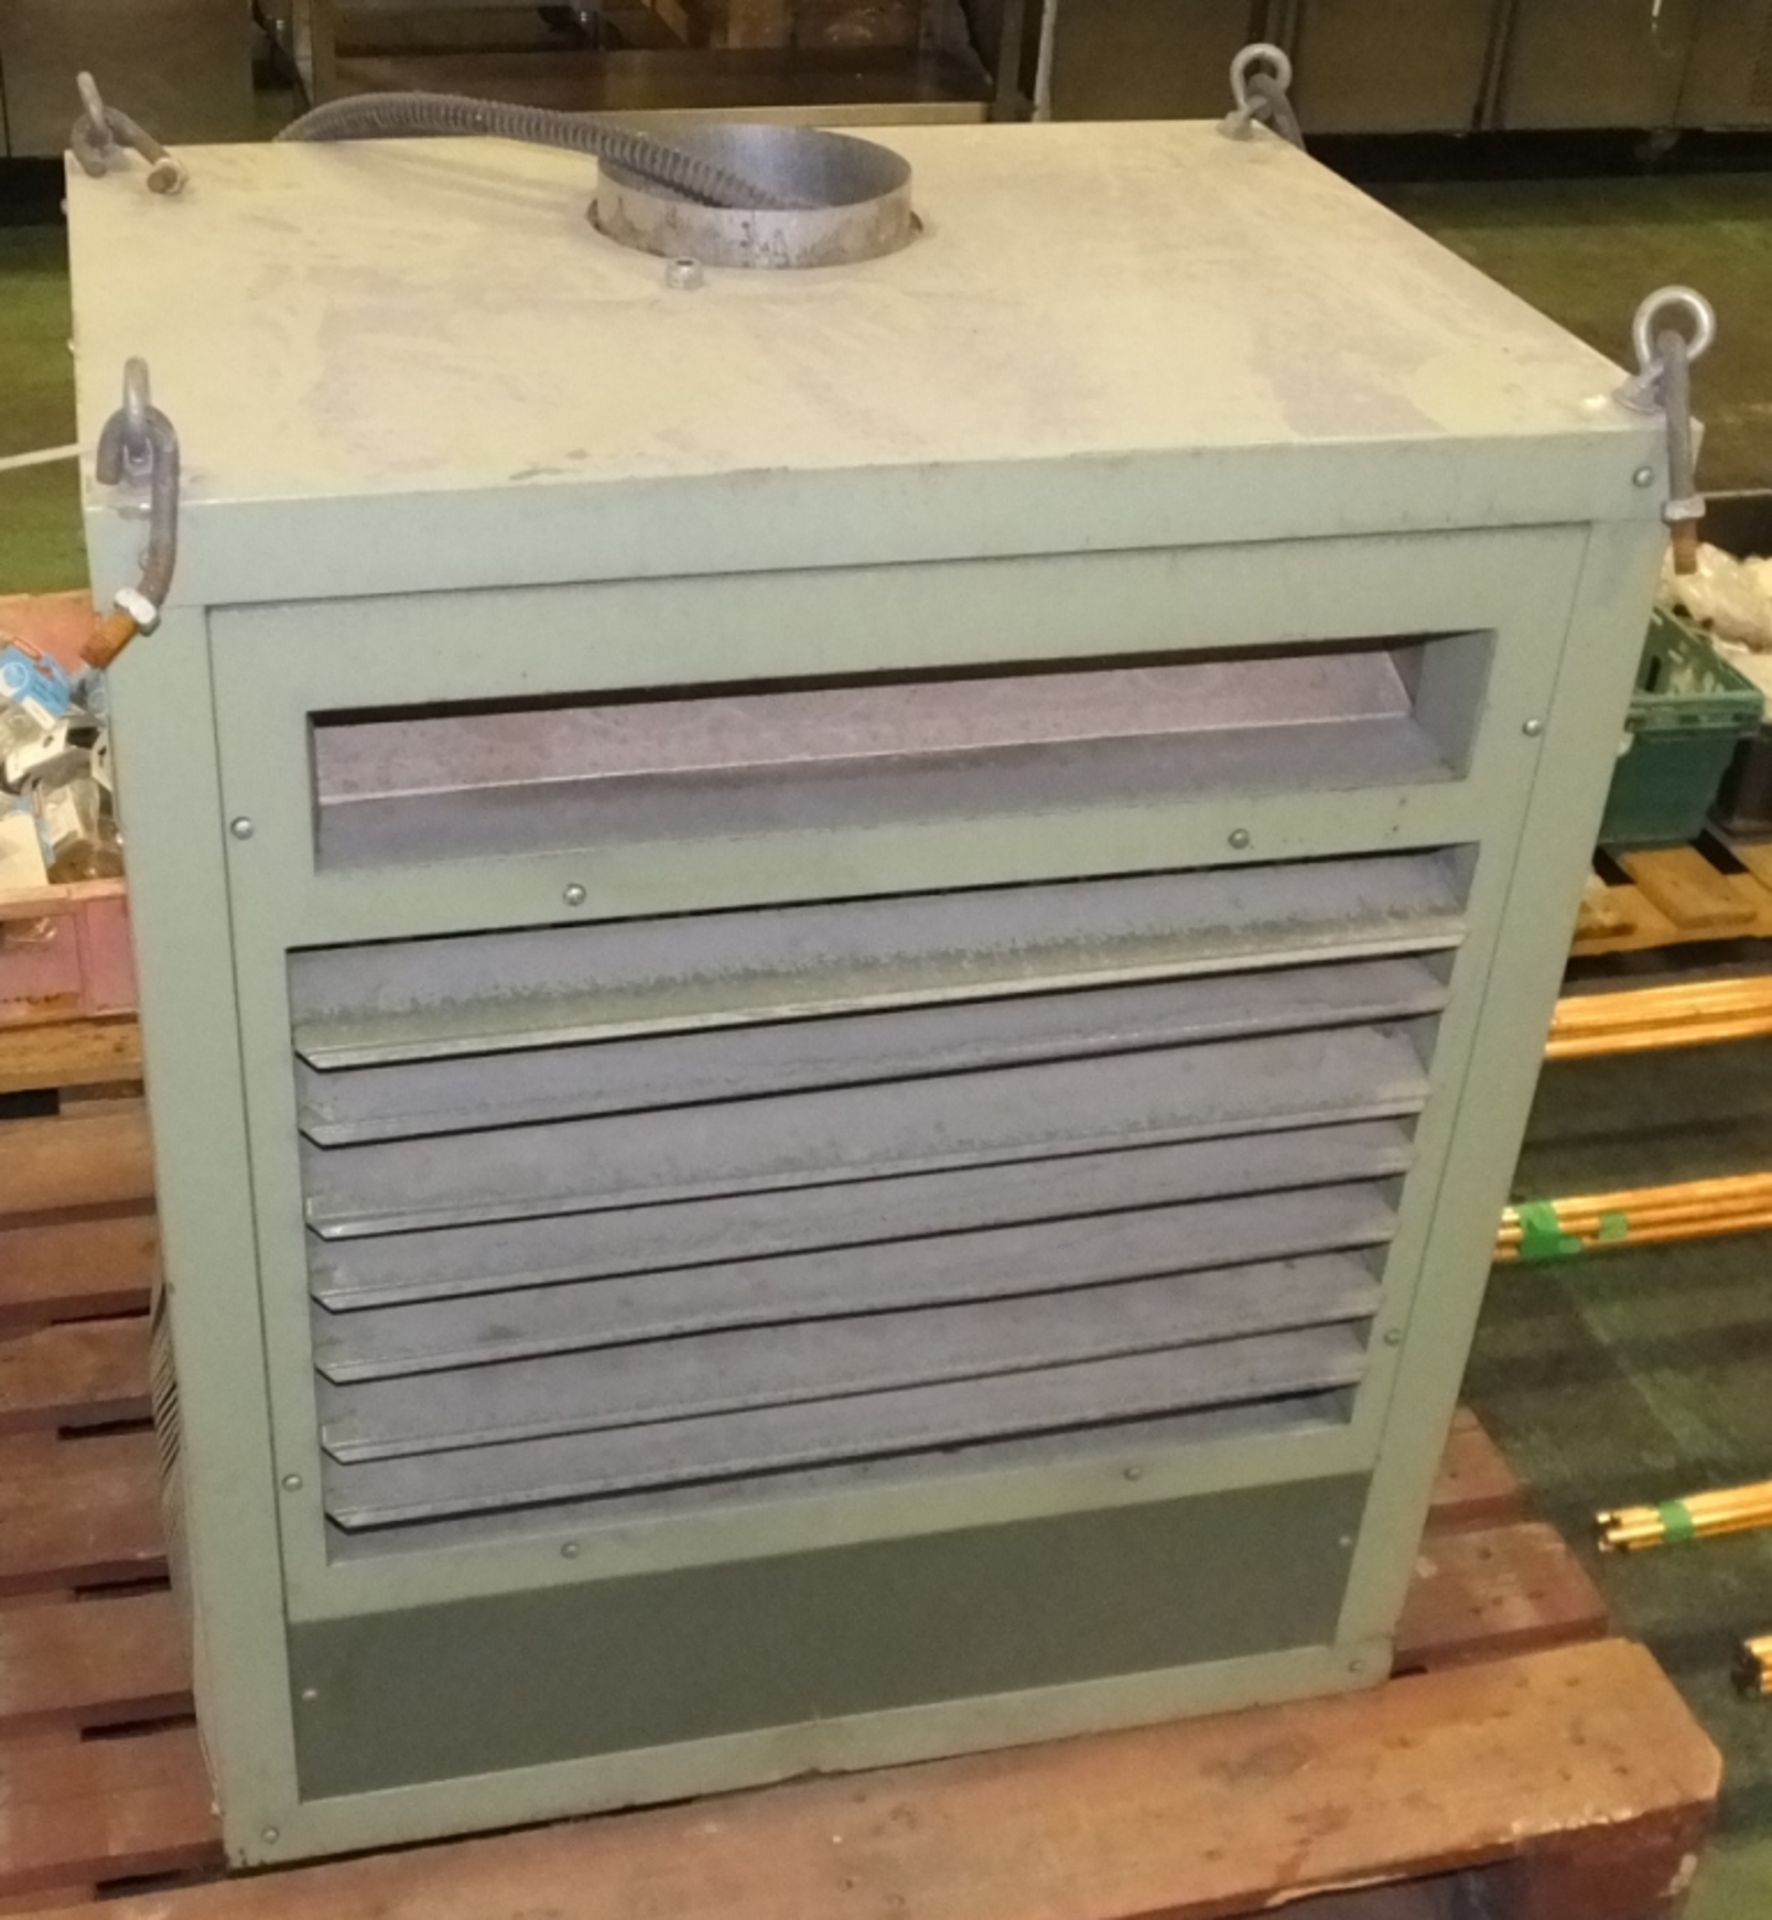 Powrmatic Industrial Gas Heater unit - 29kW